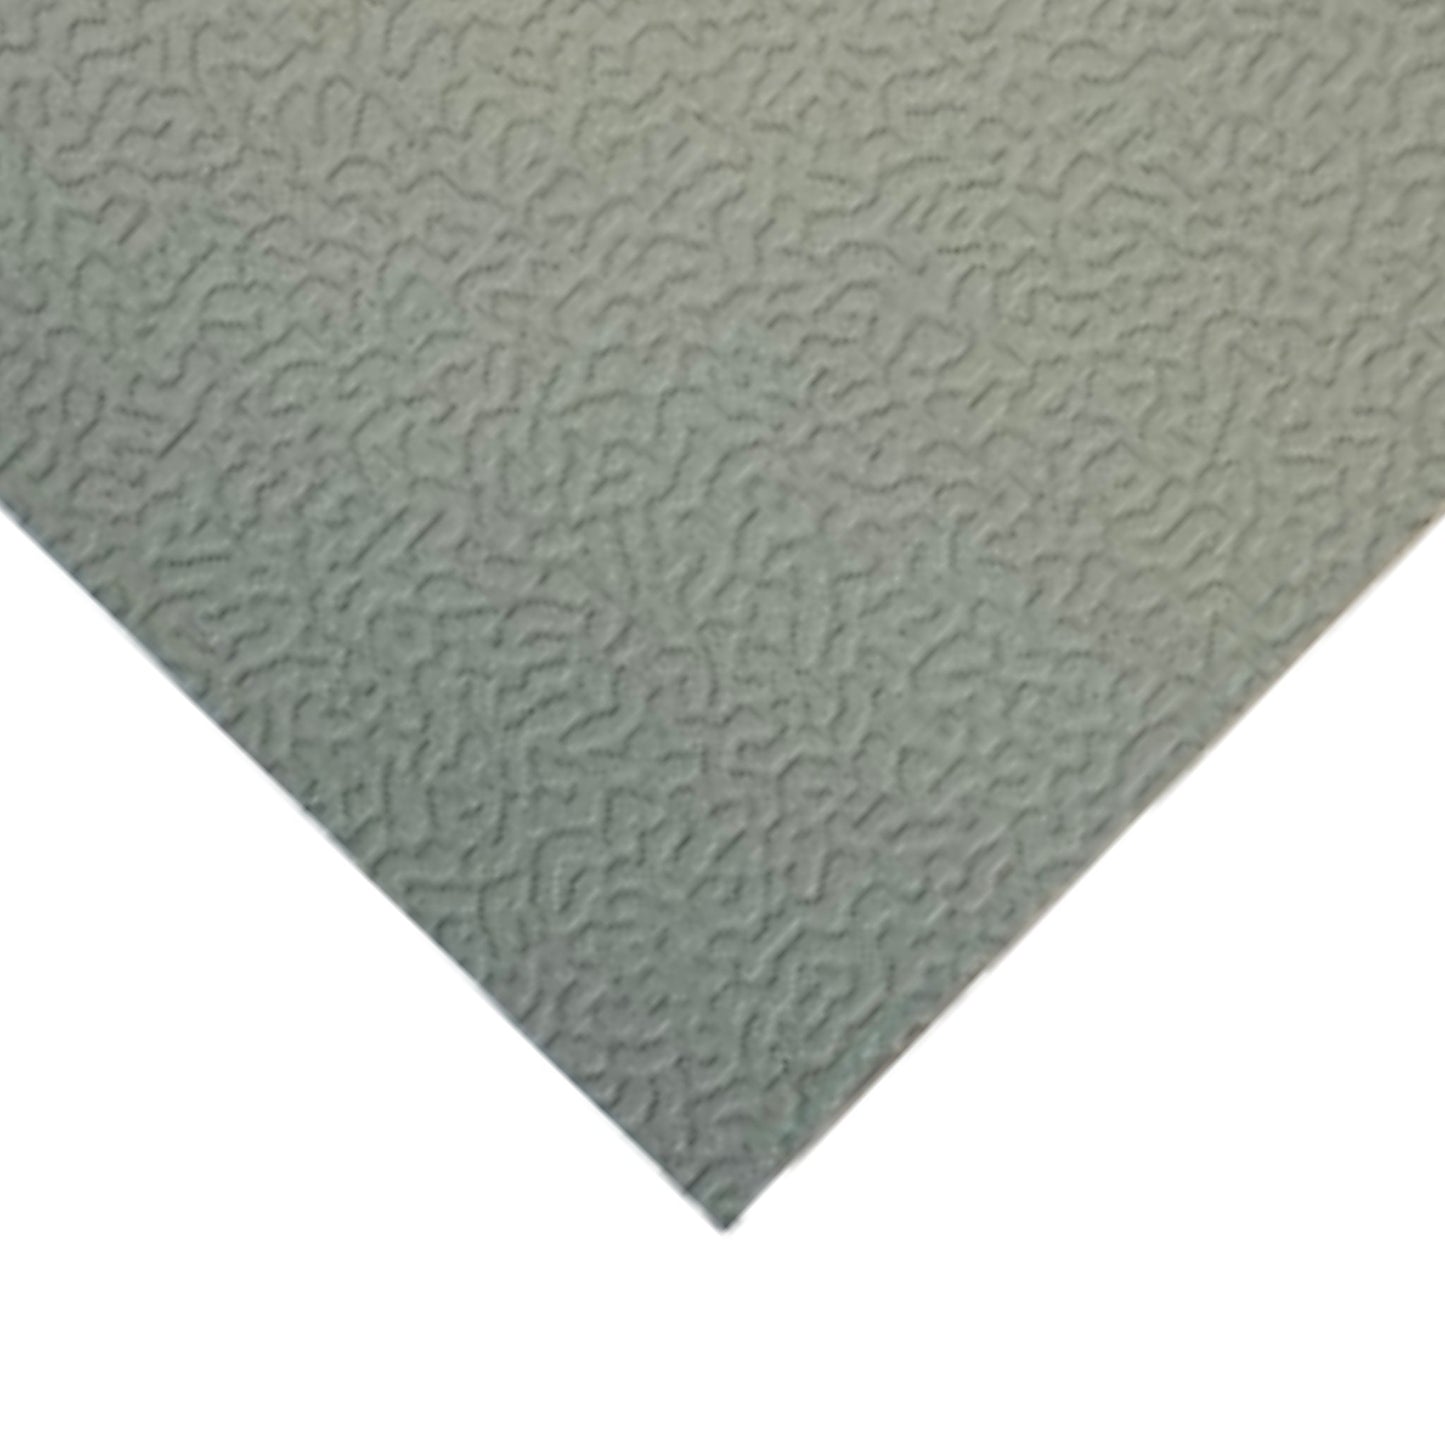 IMBER™ Rubber Tile - 39.4" x 39.4"